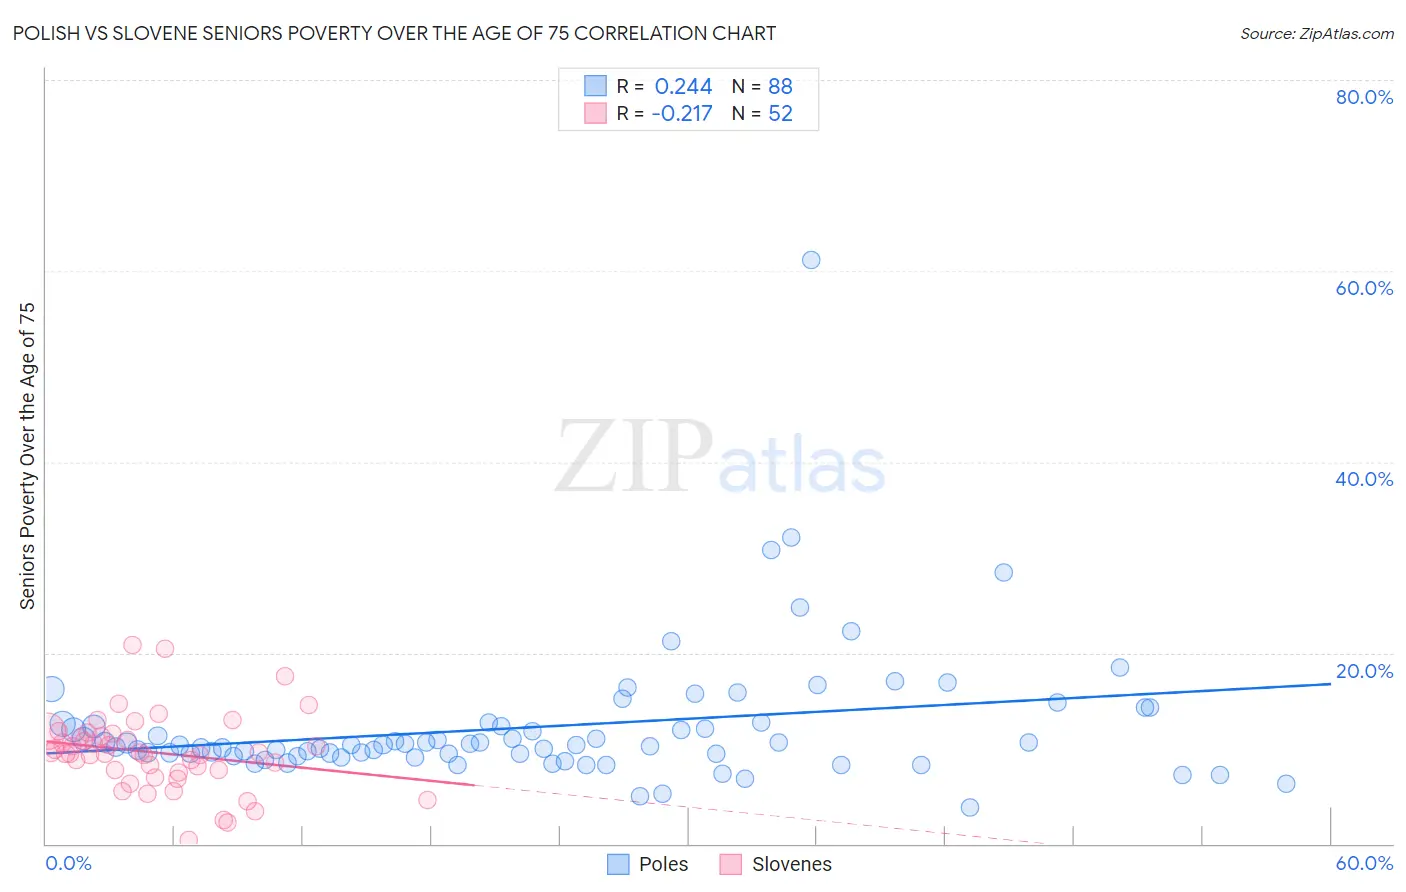 Polish vs Slovene Seniors Poverty Over the Age of 75